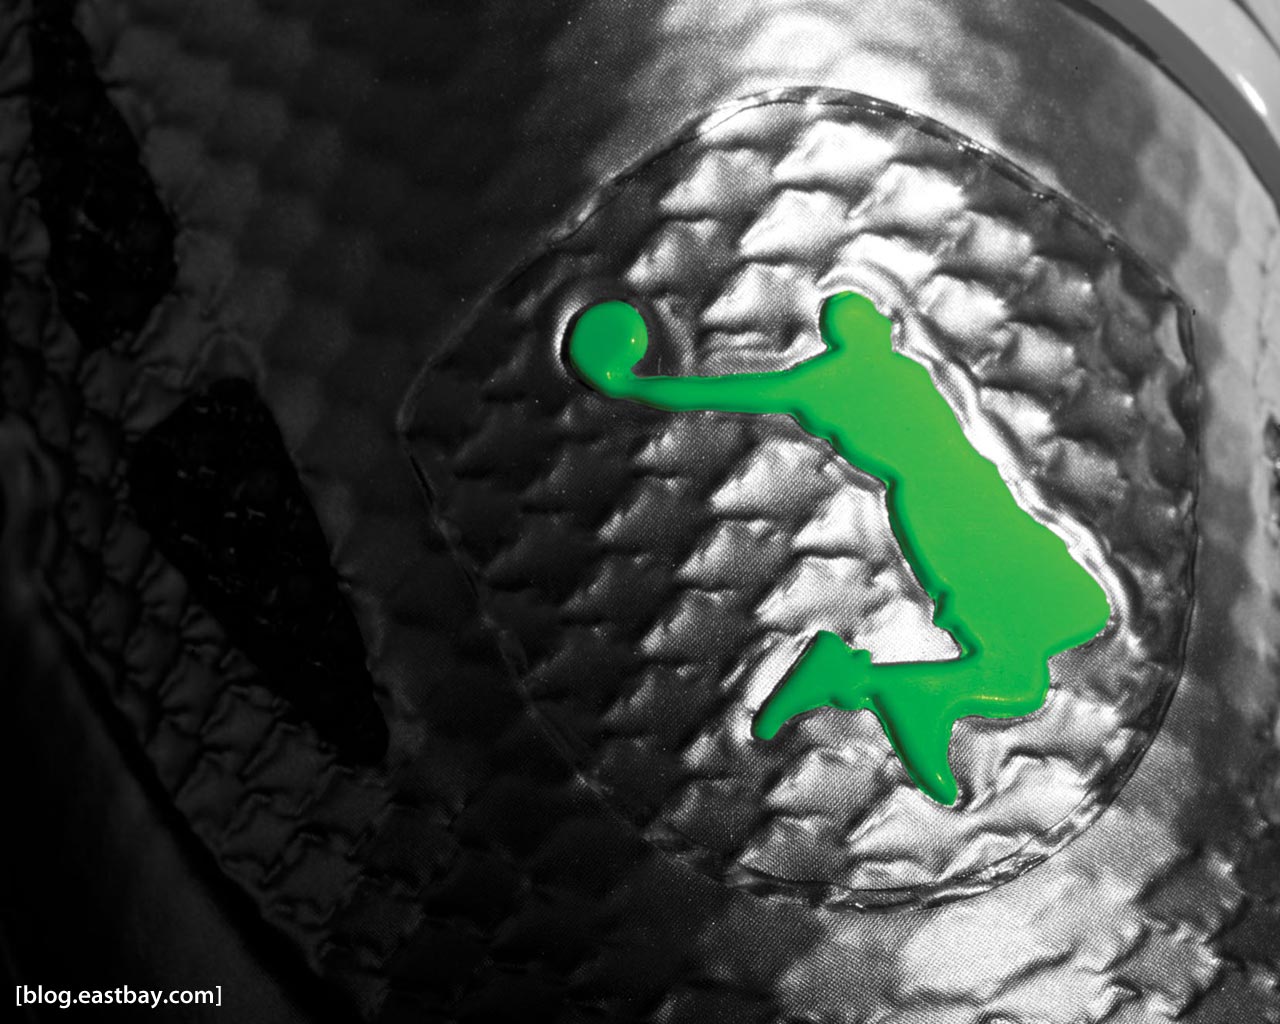 Nike Lebron Dunk Wallpapers